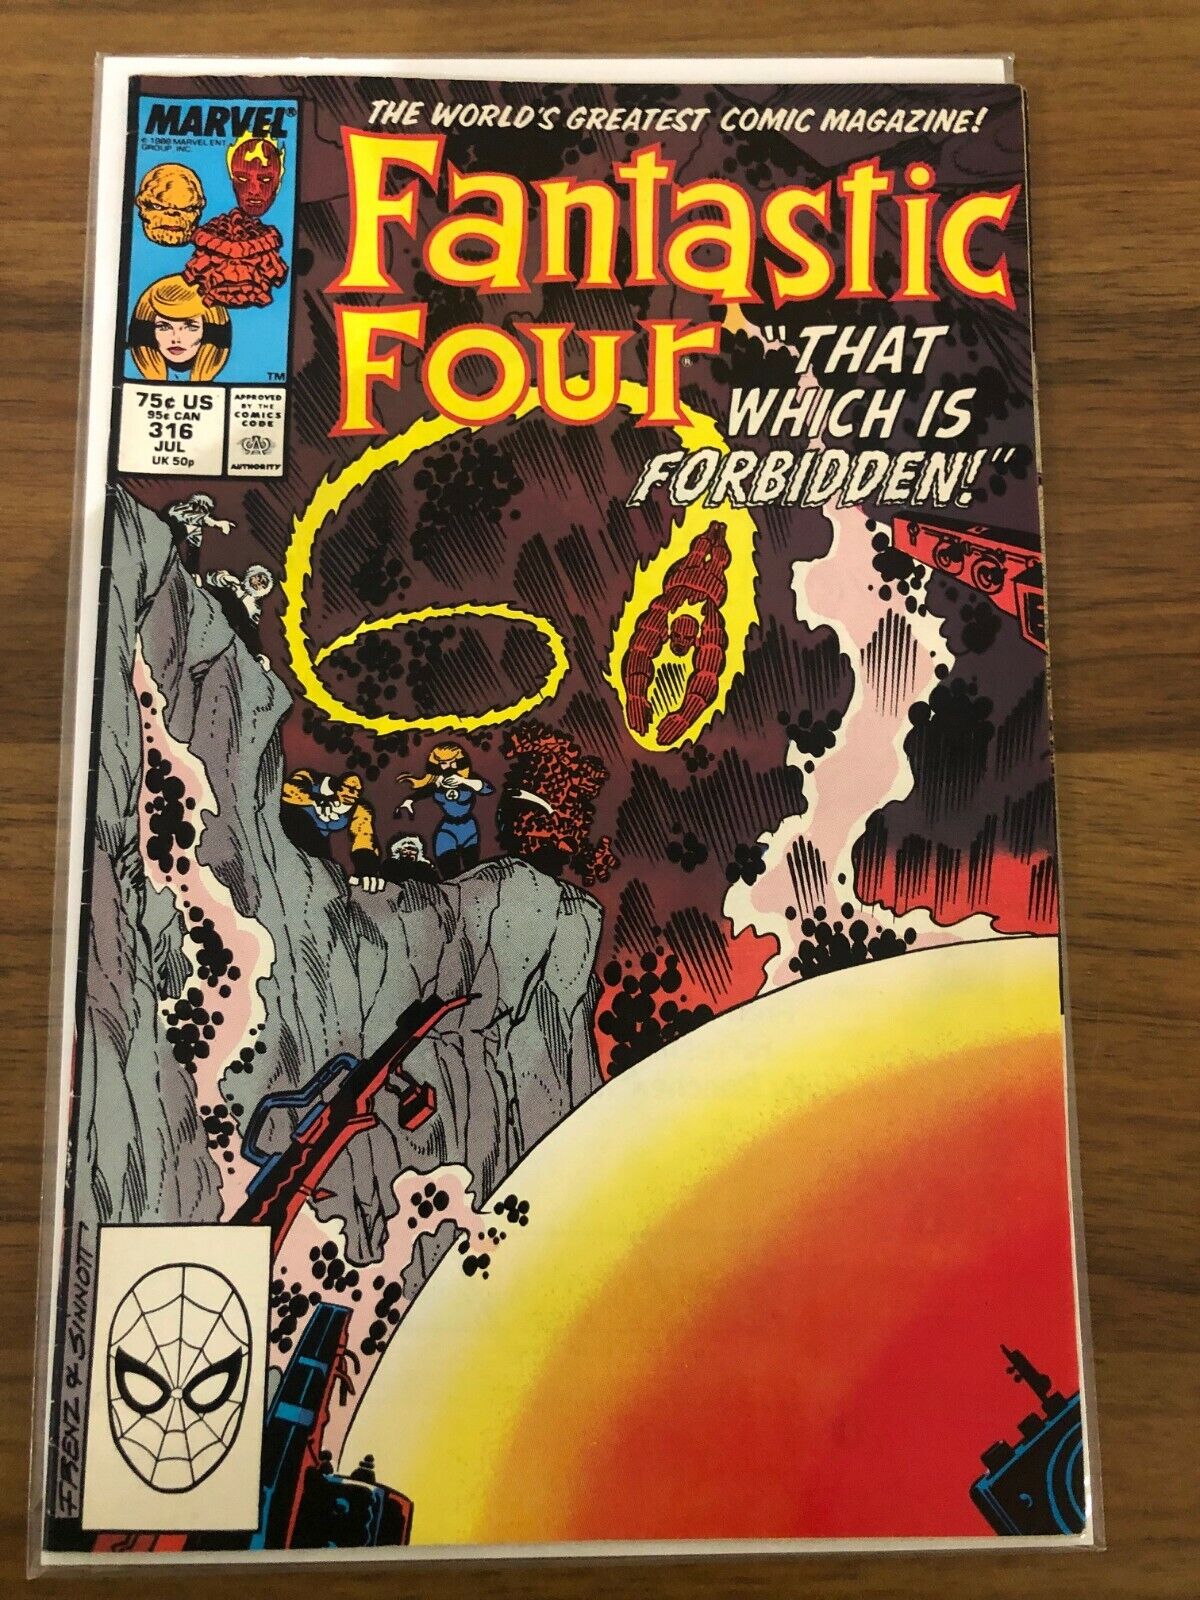 Fantastic Four (1961) #316